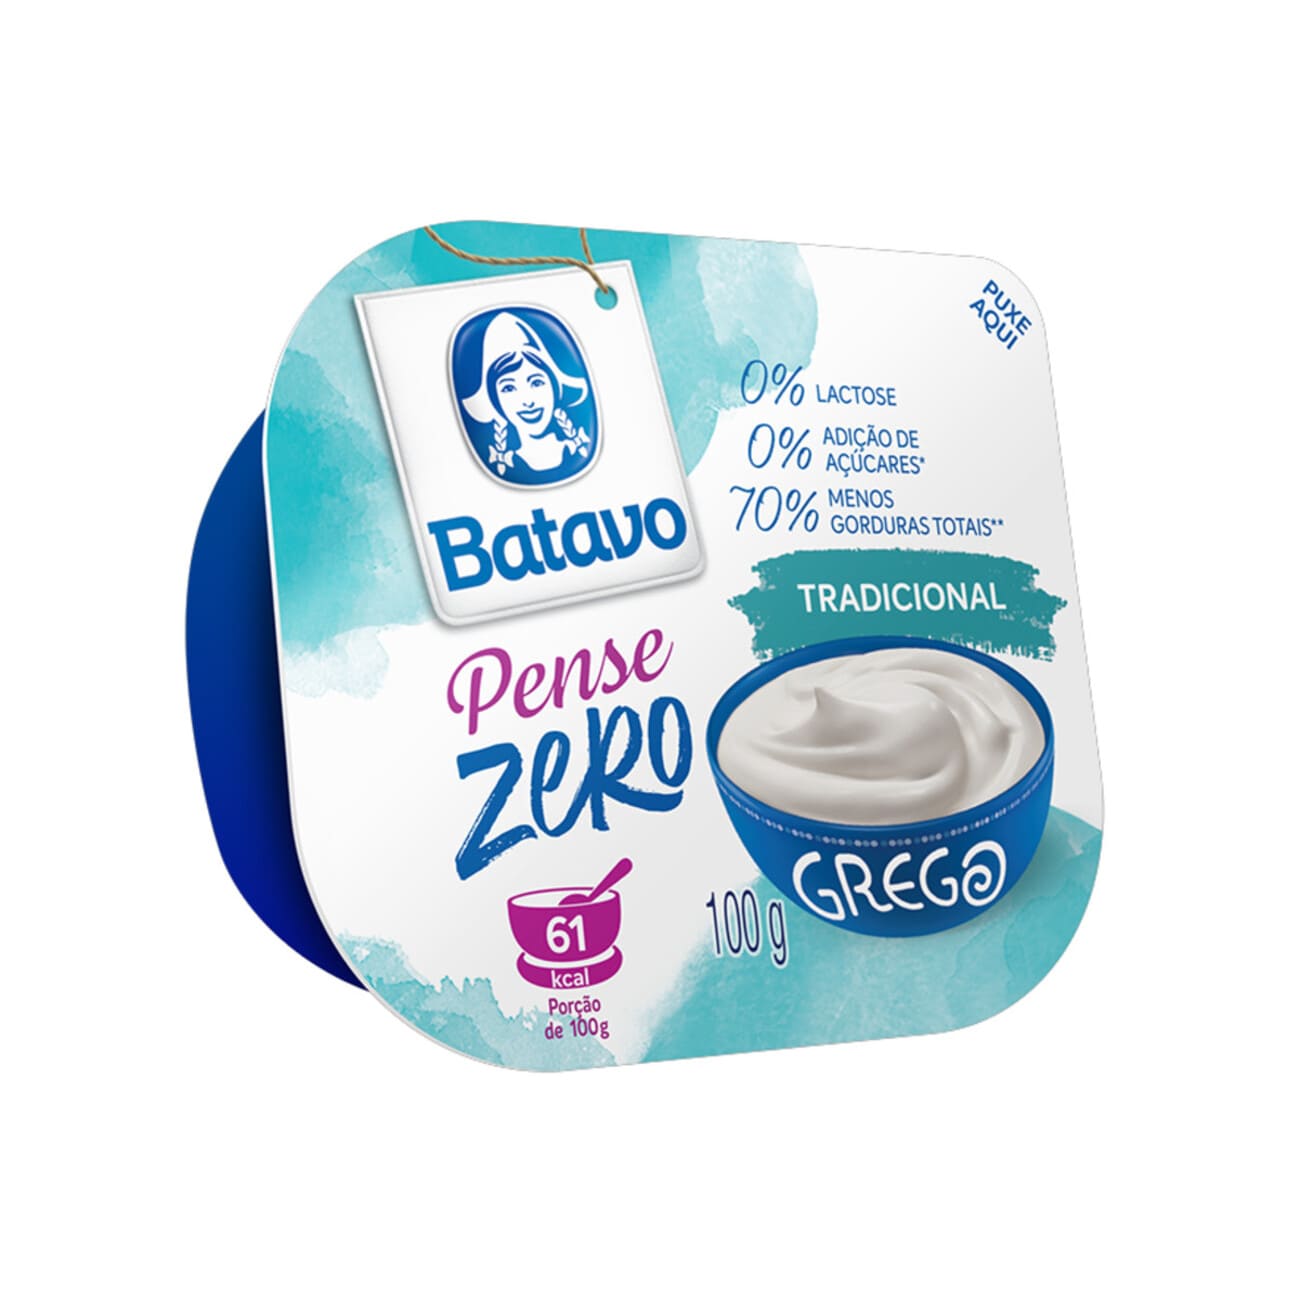 Iogurte Parcialmente Desnatado Grego Tradicional Zero Lactose para Dietas com Restrio de Lactose sem Adio de Acar Batavo Pense Zero Pote 100g